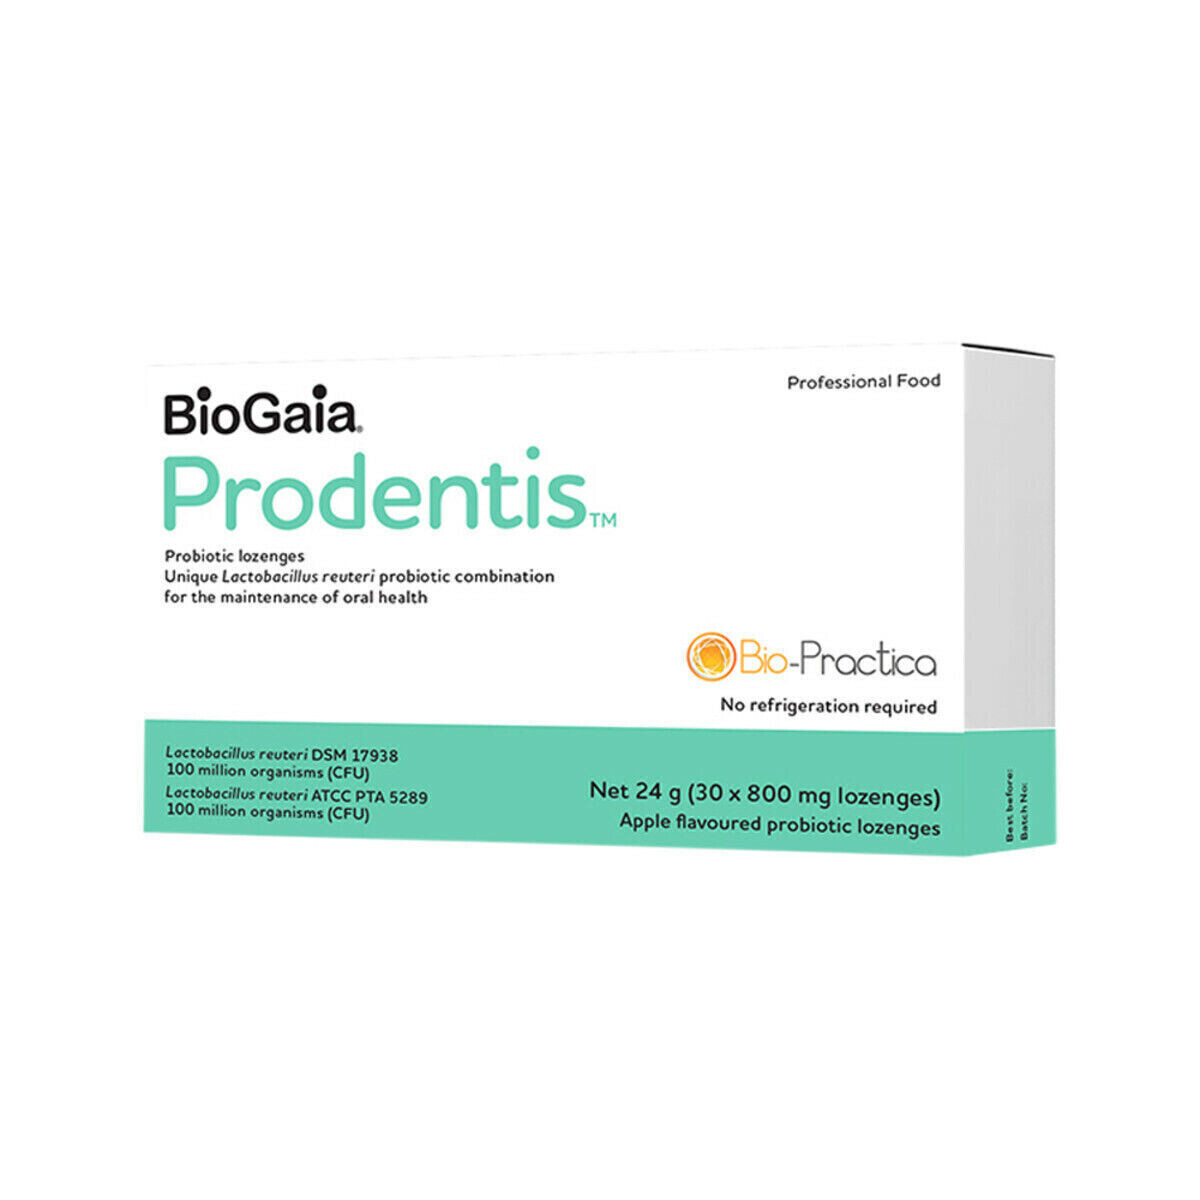 BioGaia Prodentis Probiotic x 30 Lozenges (Apple flavor) Free Postage